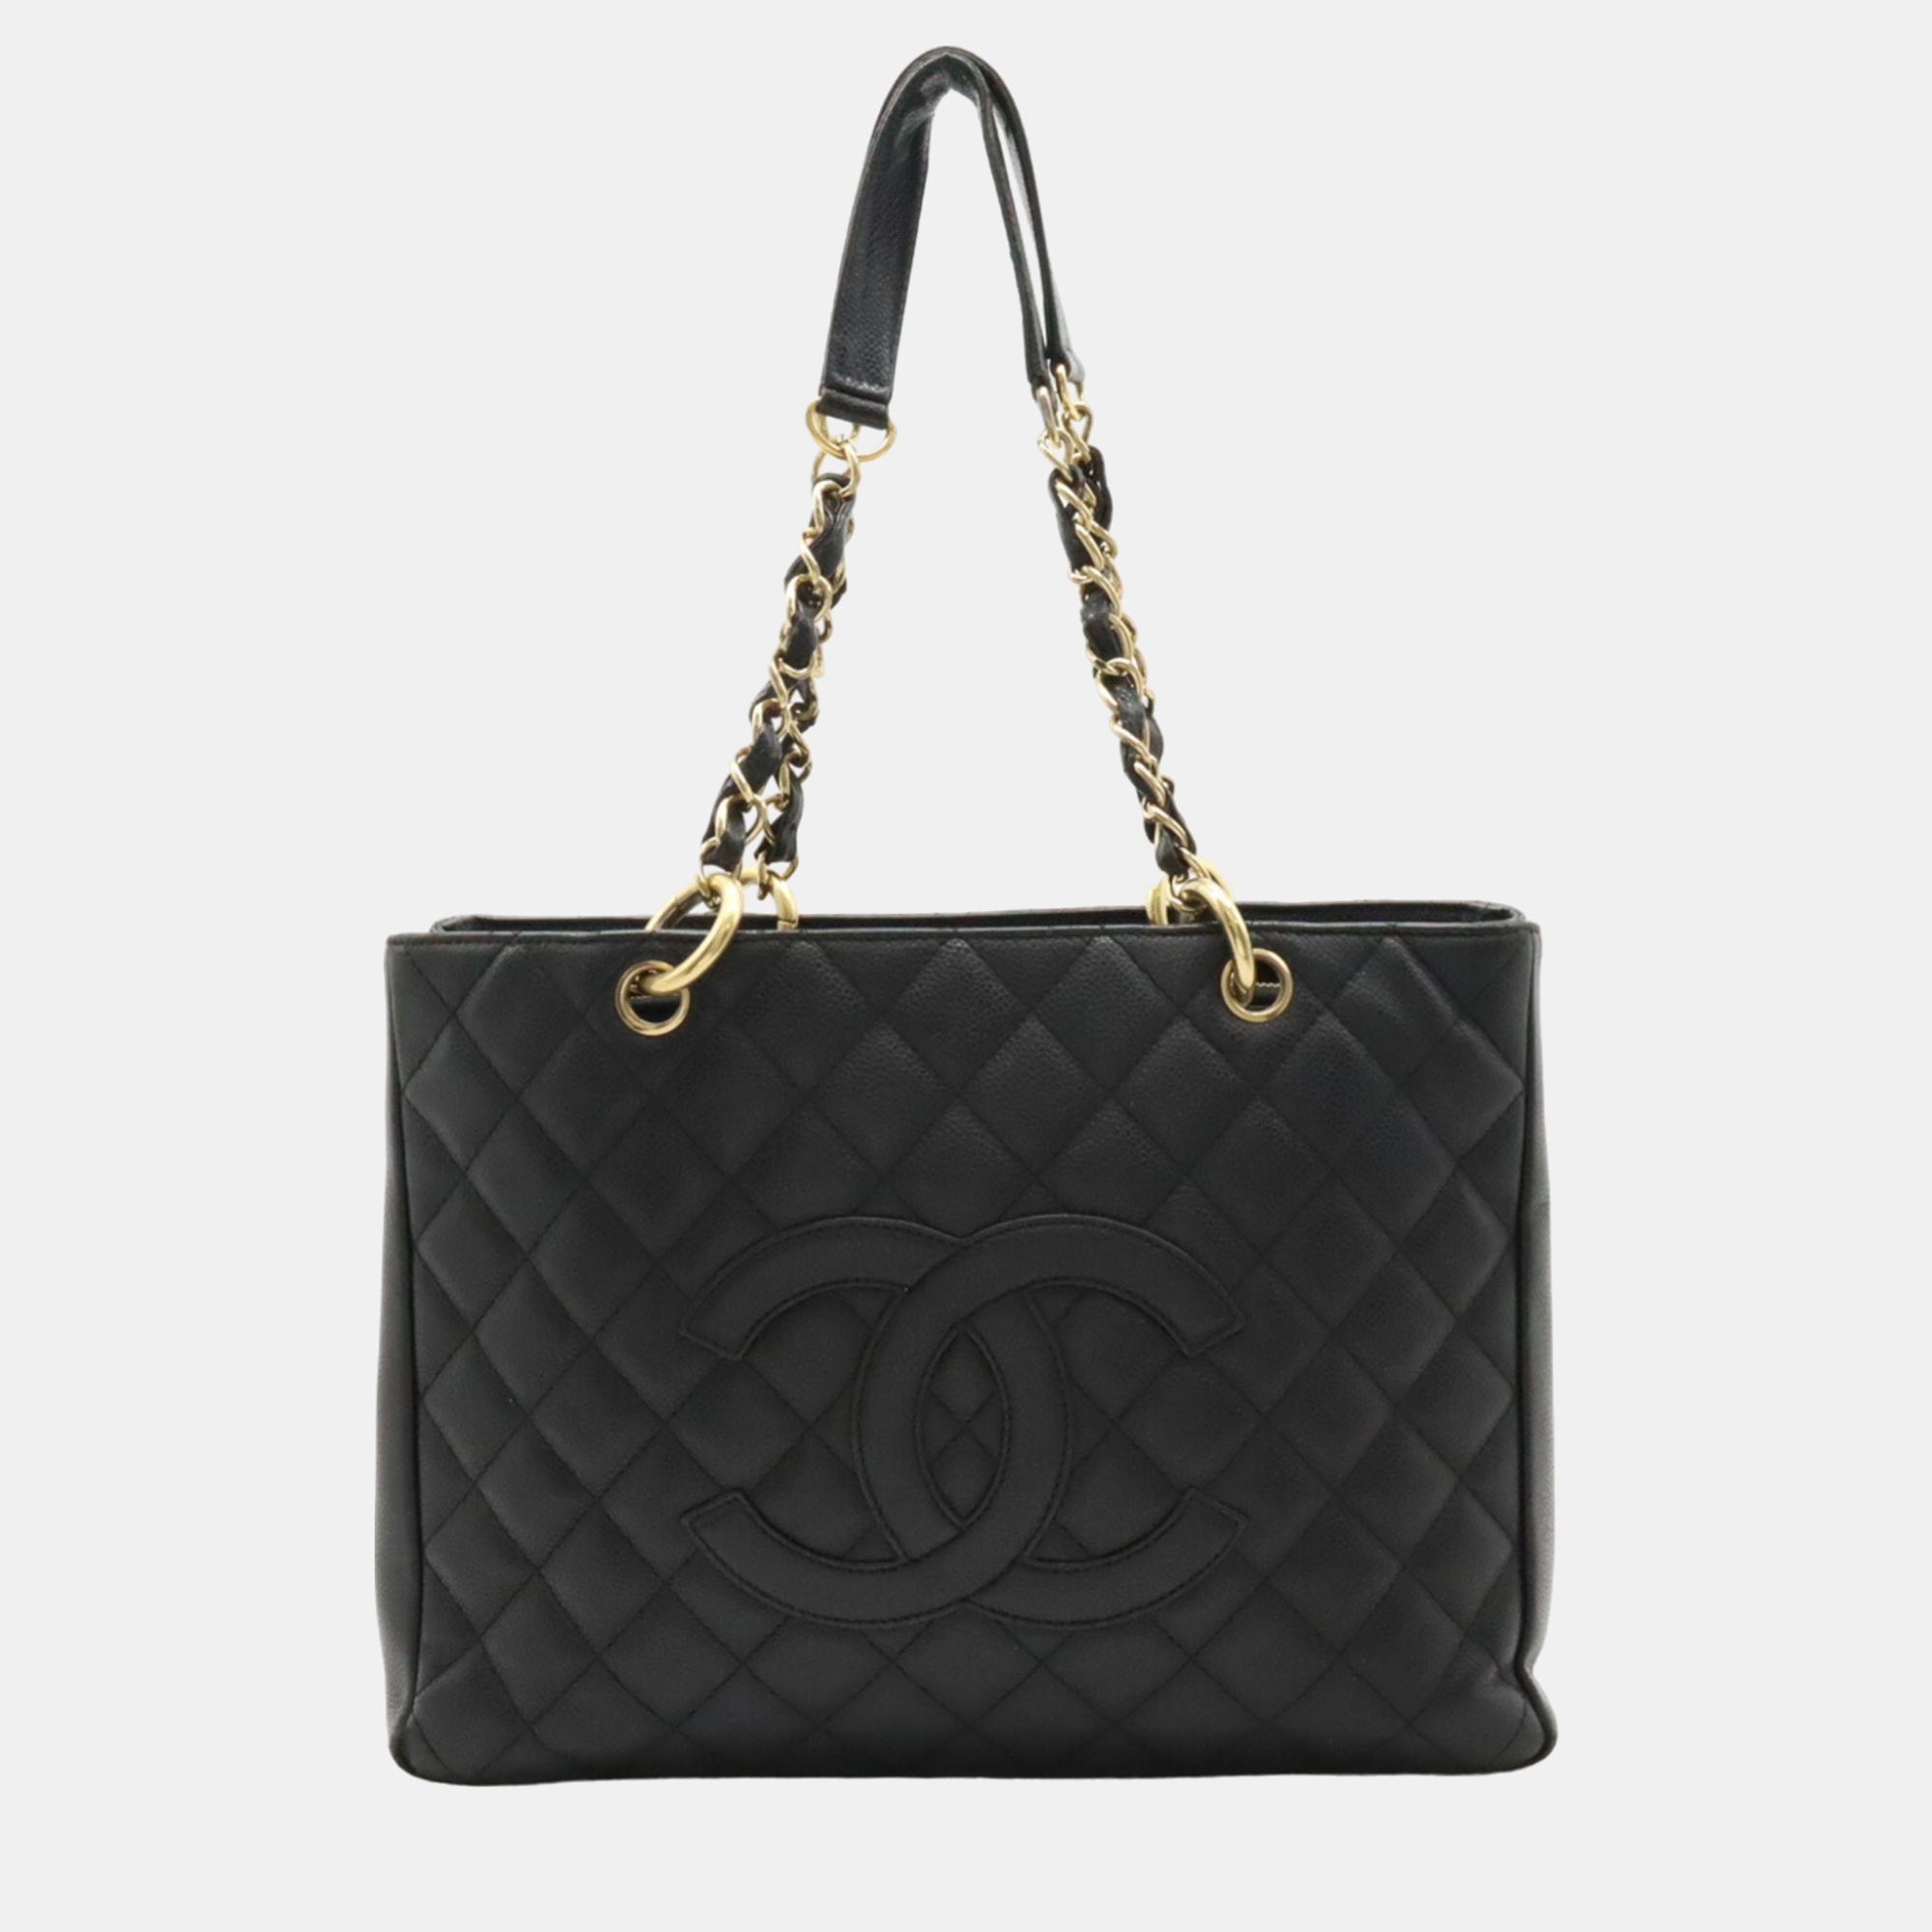 

Chanel Black Caviar Leather GST Tote Bag